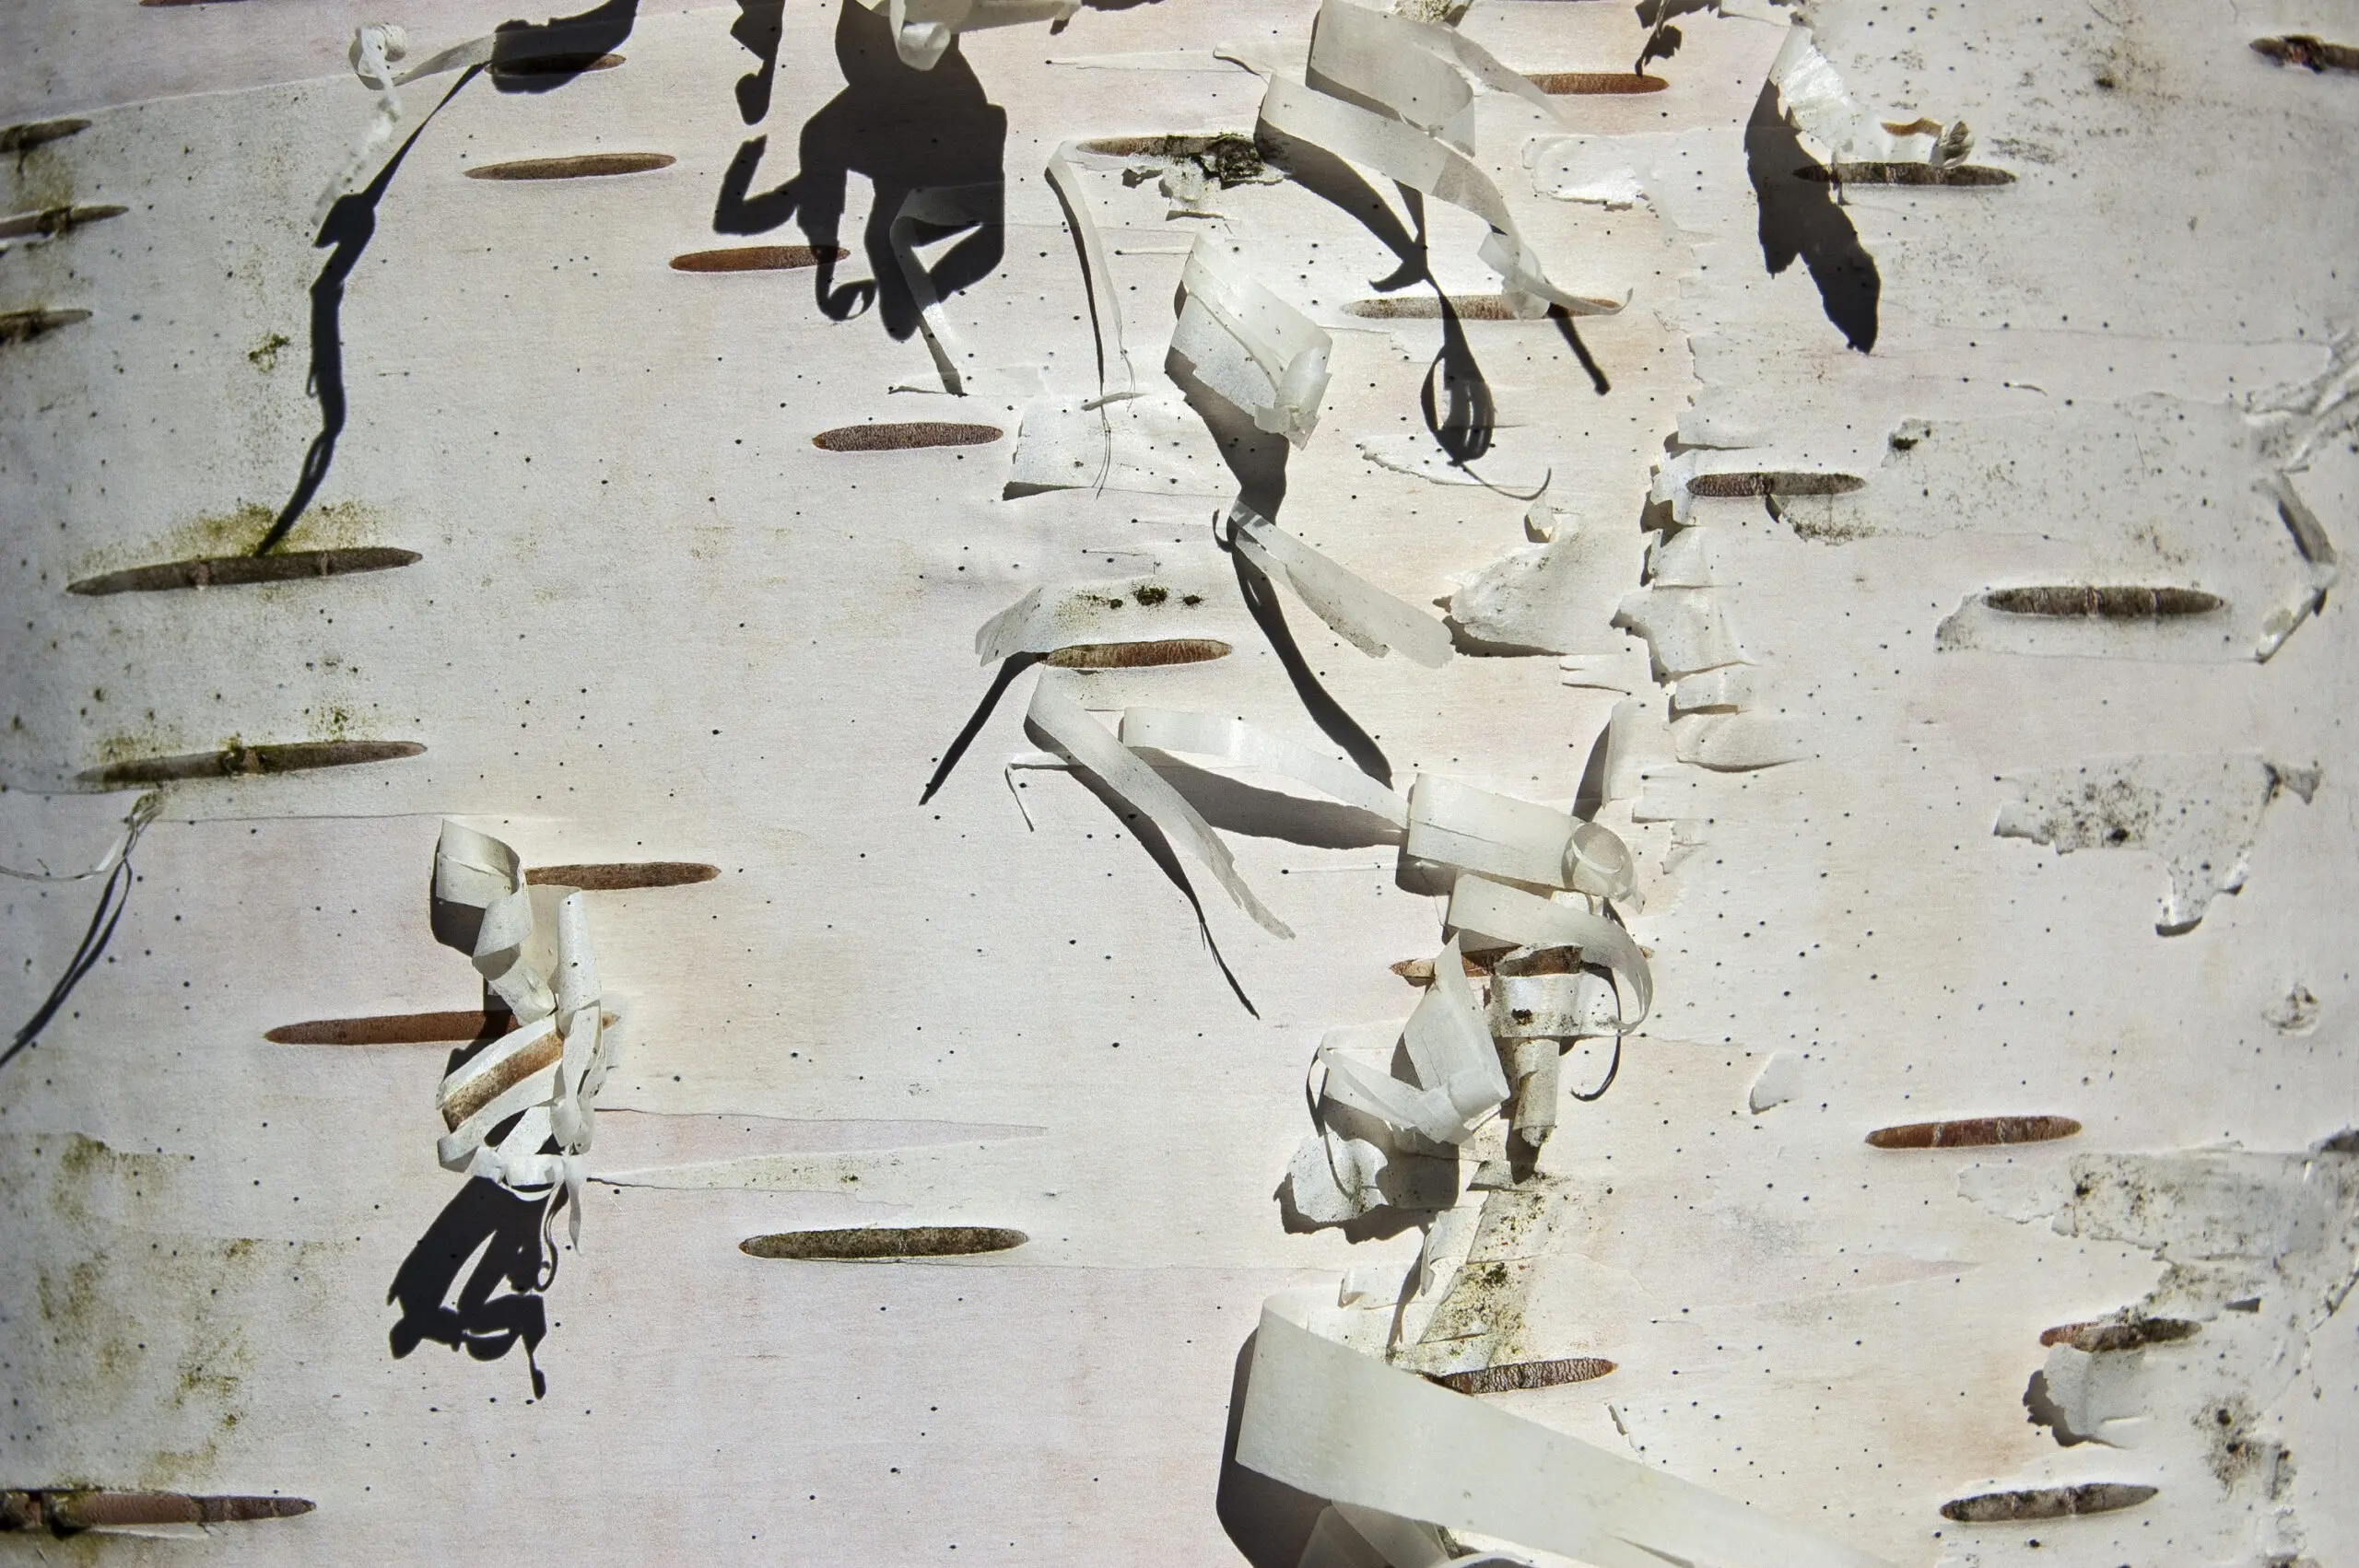 Wandbild (1970) Birke präsentiert: Details und Strukturen,Natur,Makro,Holz